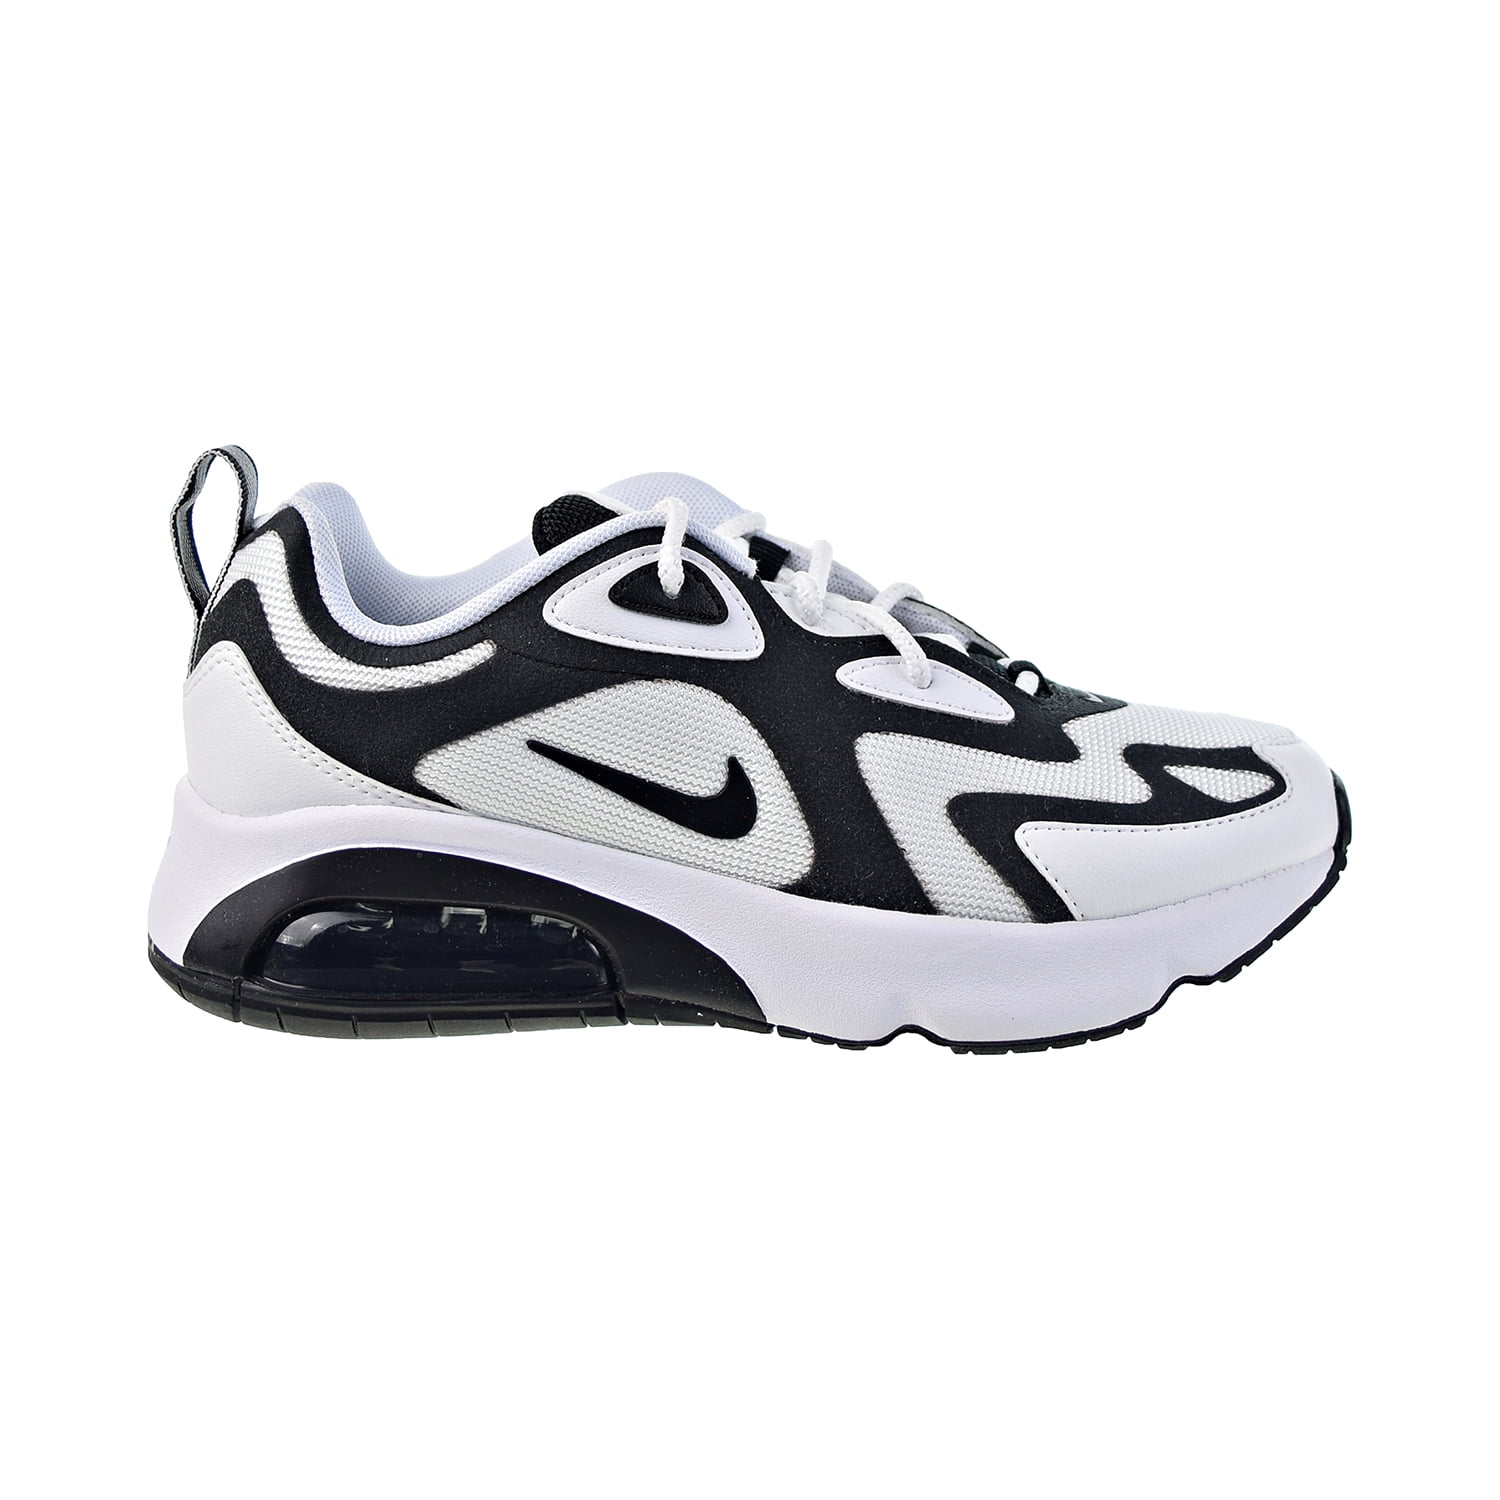 Nike Women's Shoes White-Black-Anthracite at6175-104 - Walmart.com